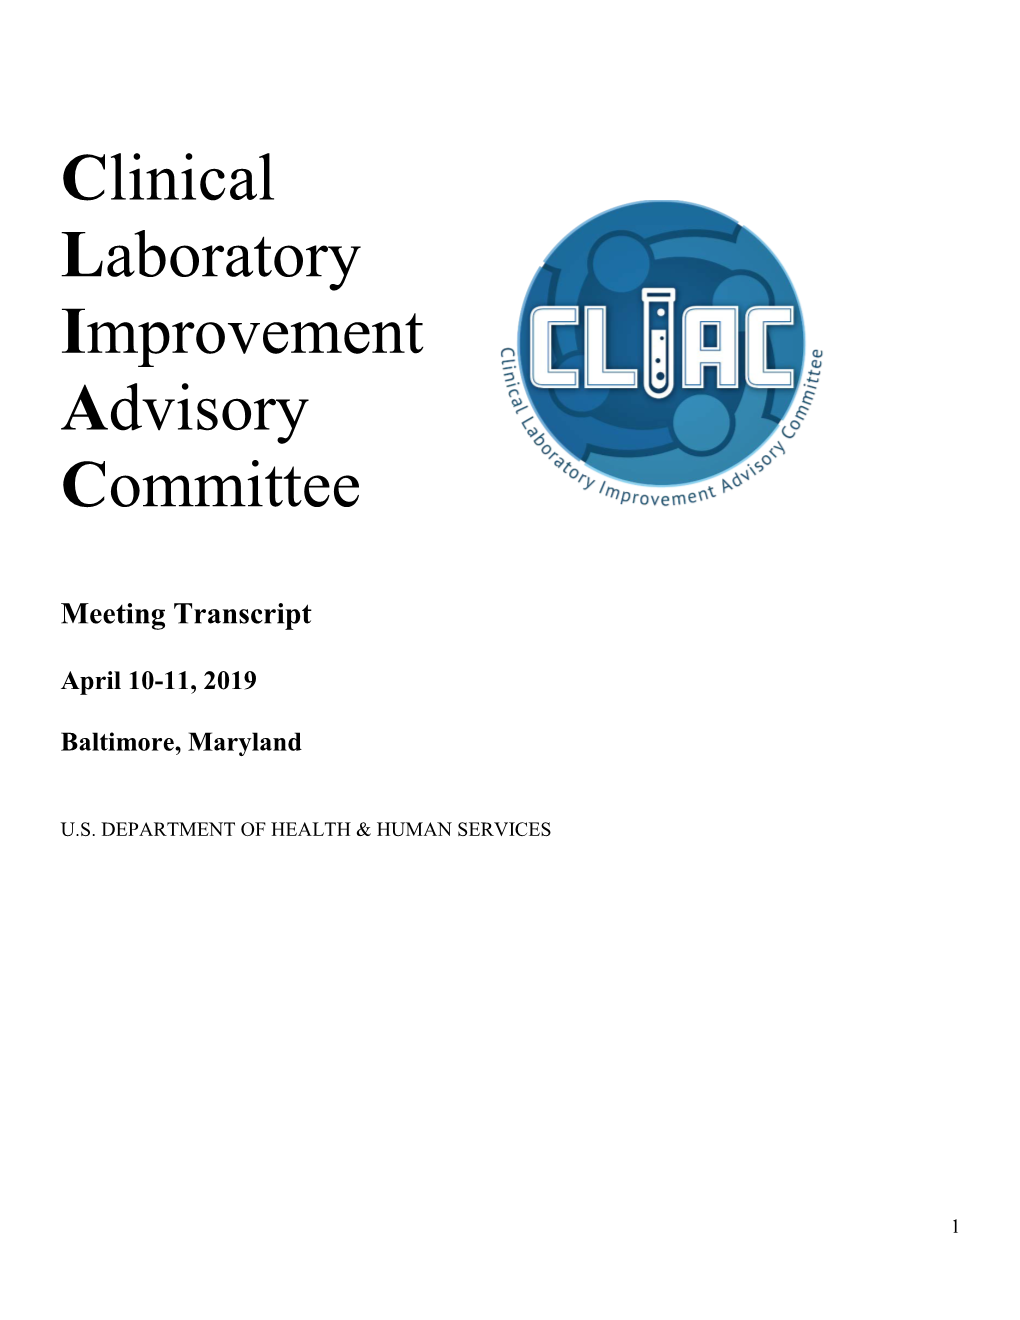 Clinical Laboratory Improvement Advisory Committee